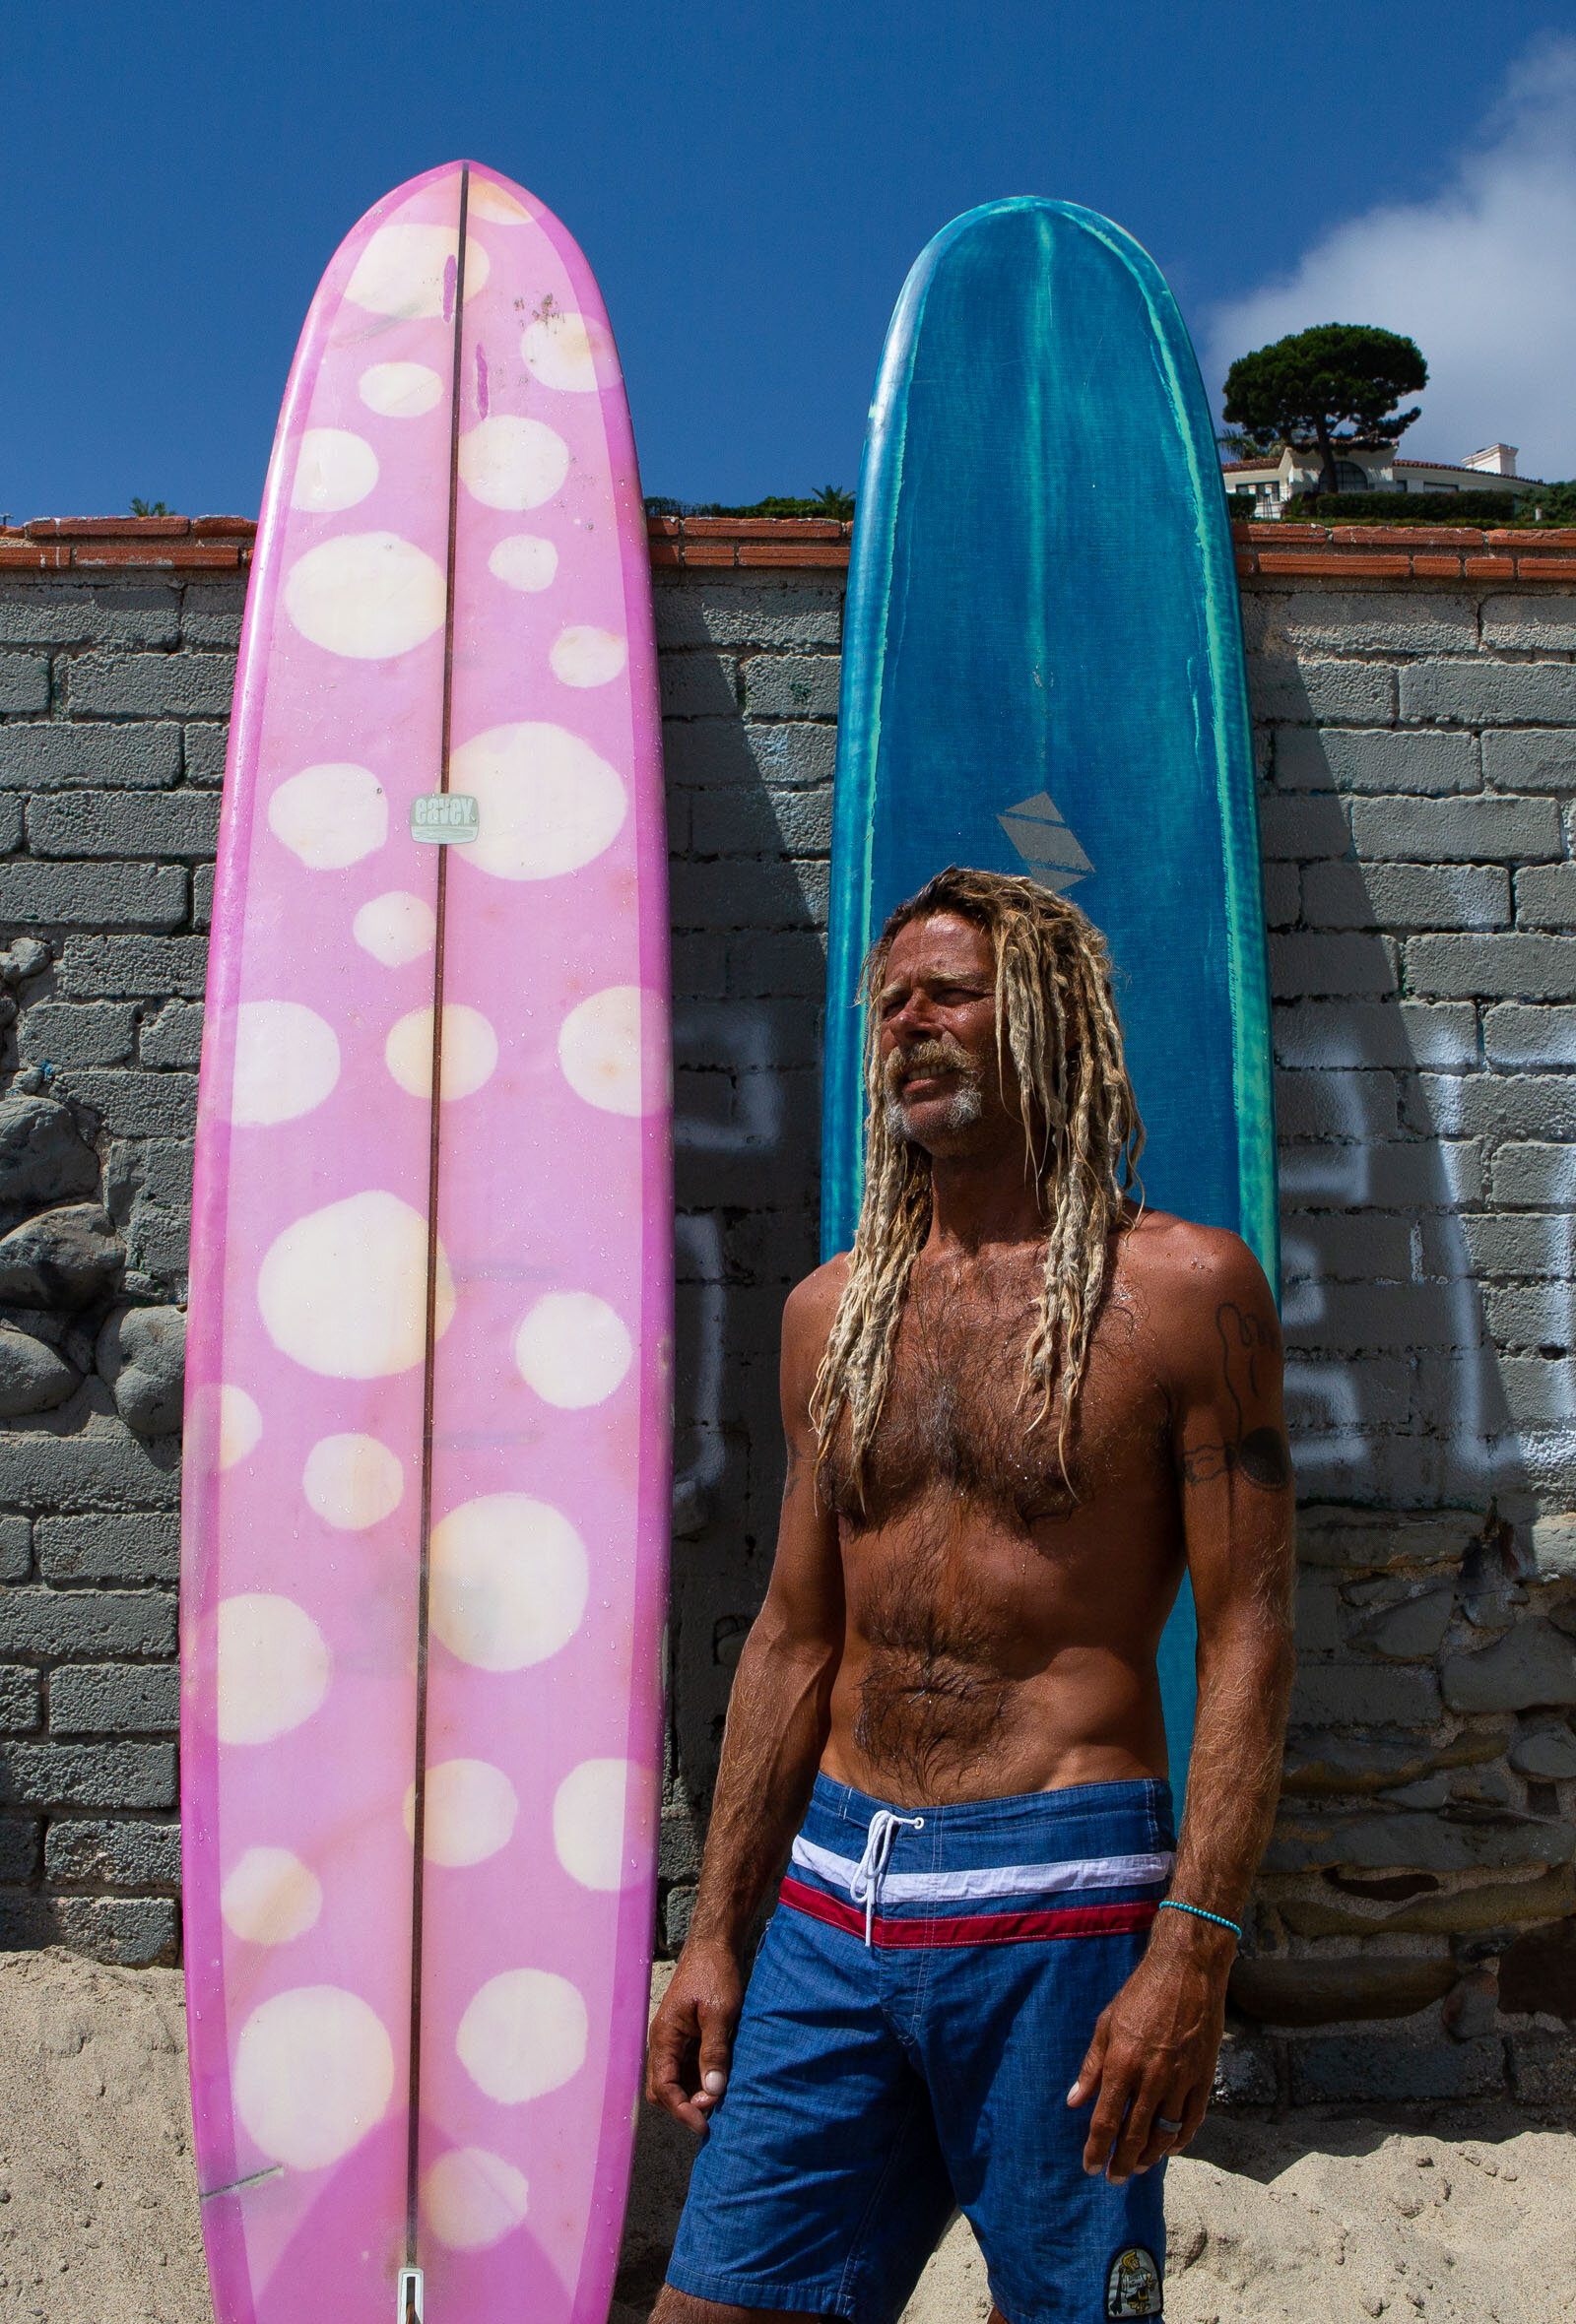 Timothy Haizlip, a Malibu-area surfer,  for LAist